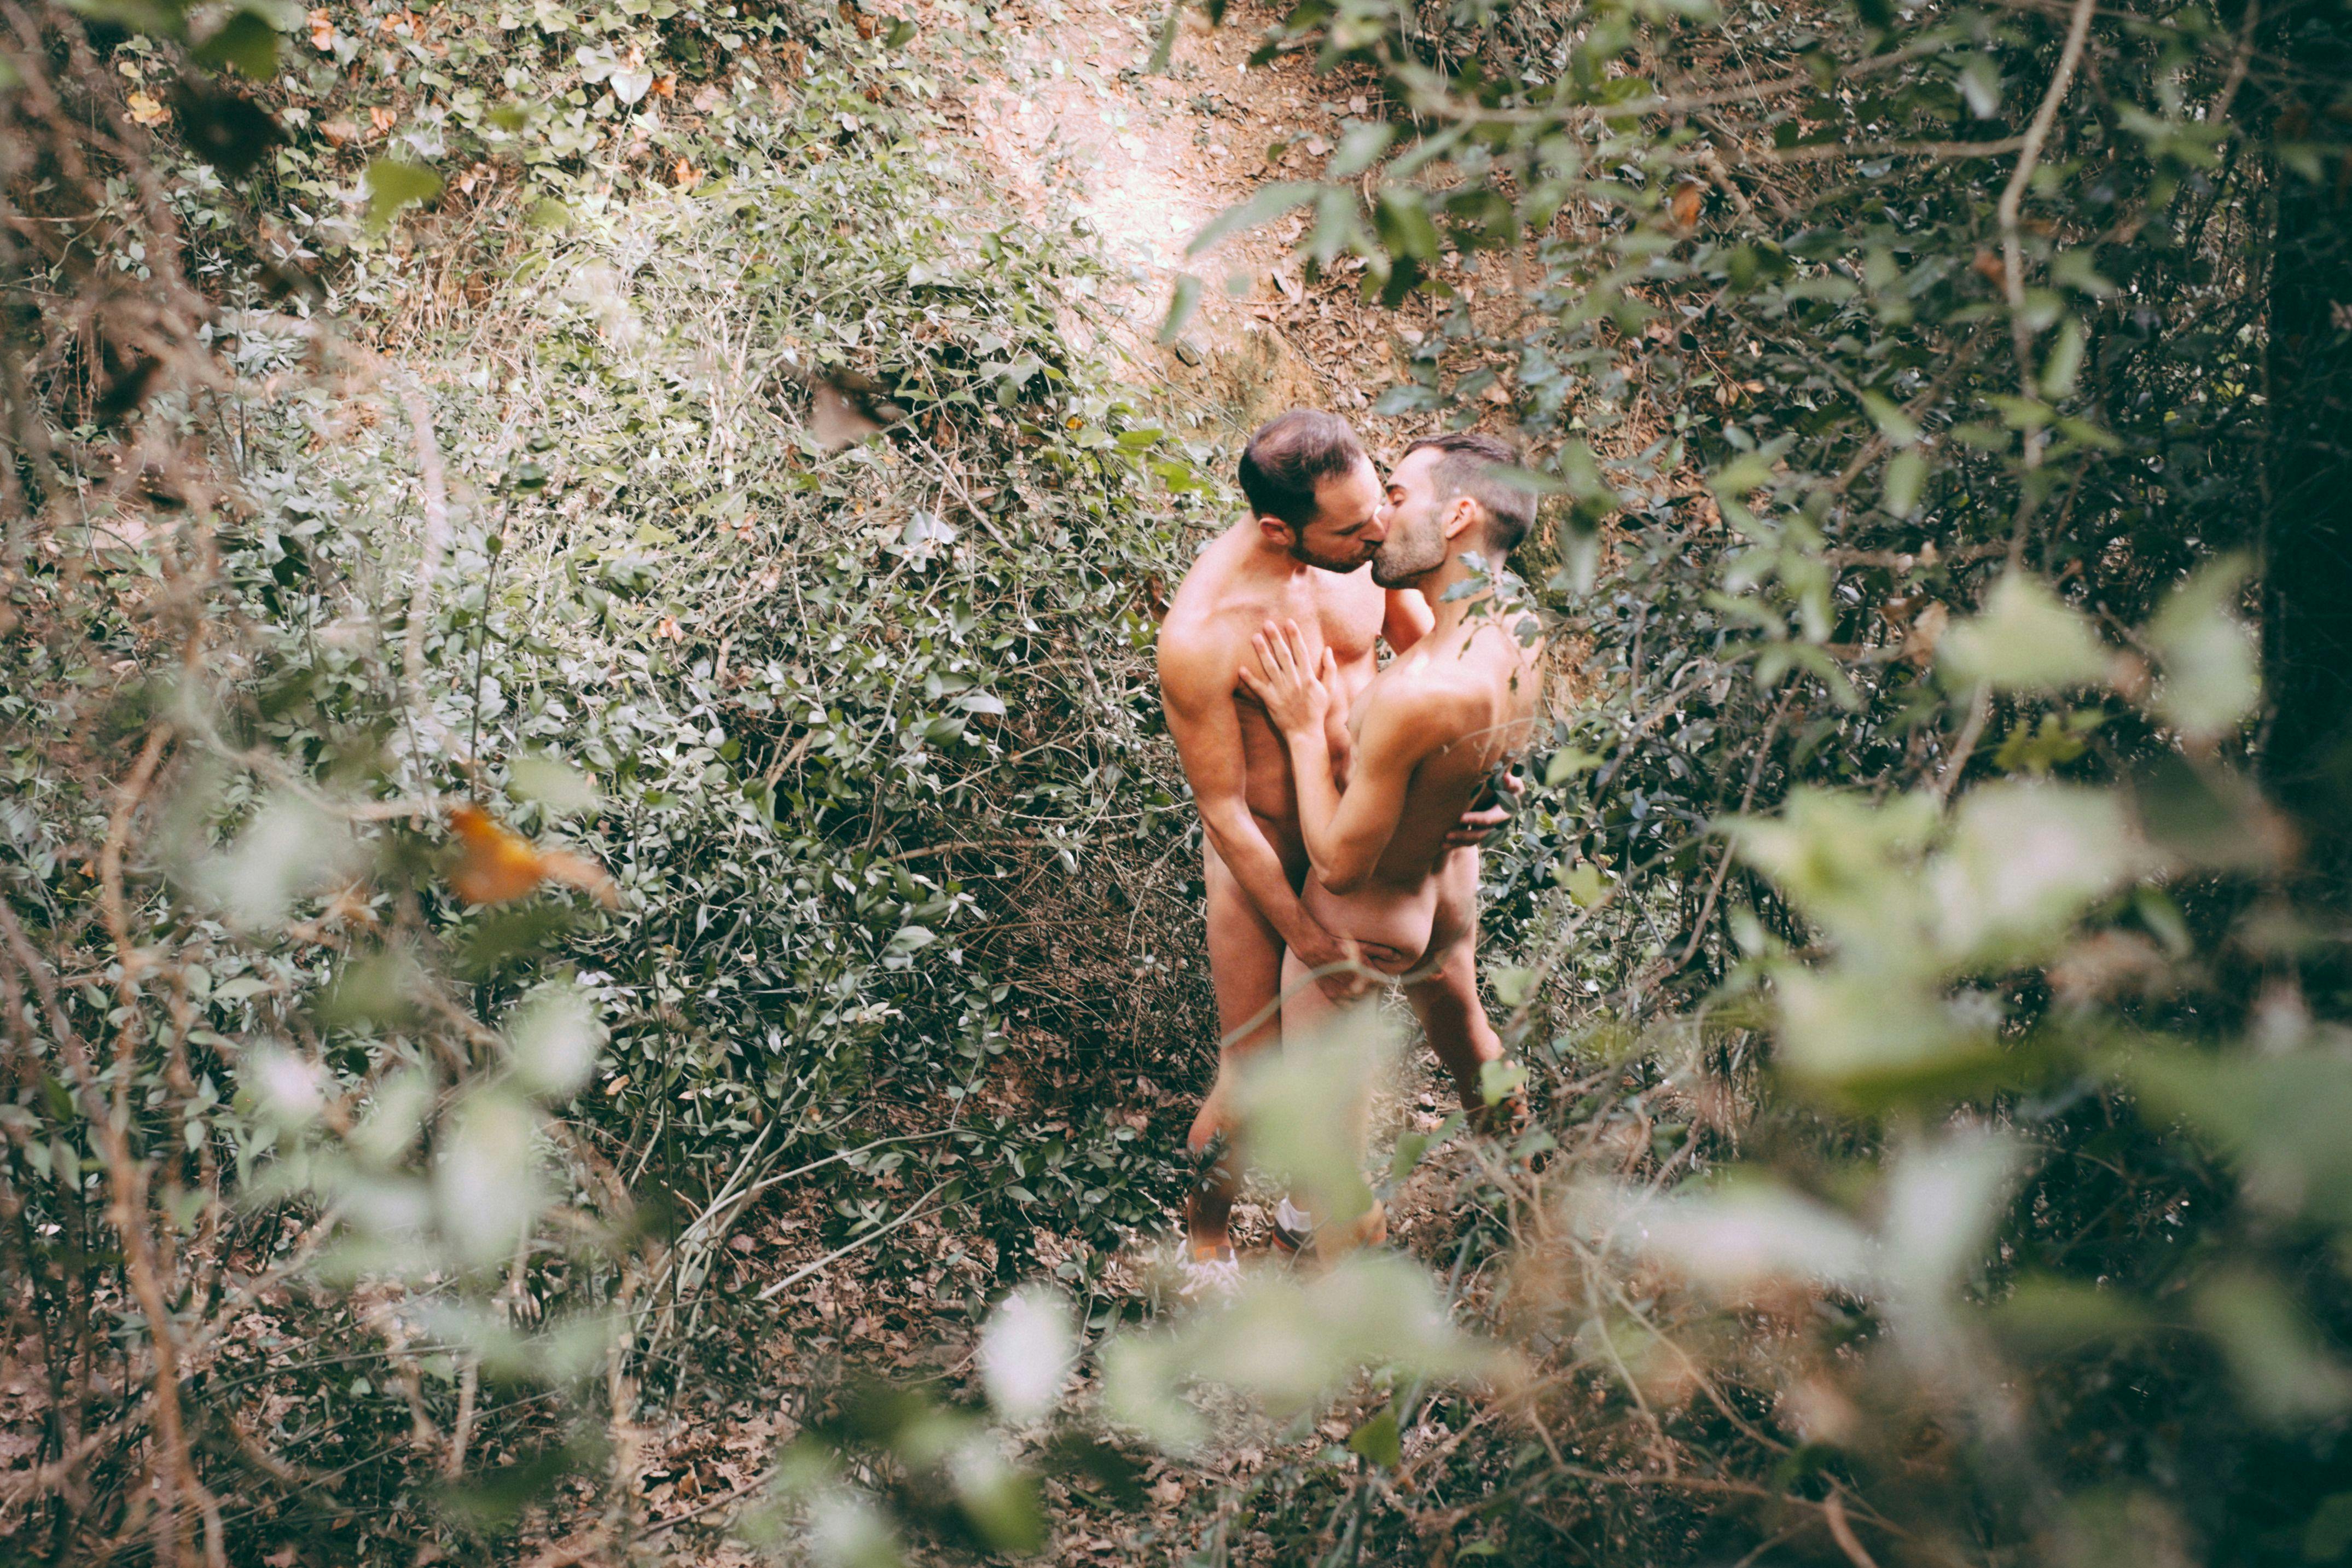 Noel Alejandro erotic gay film Fuck Forest two men kissing in forest